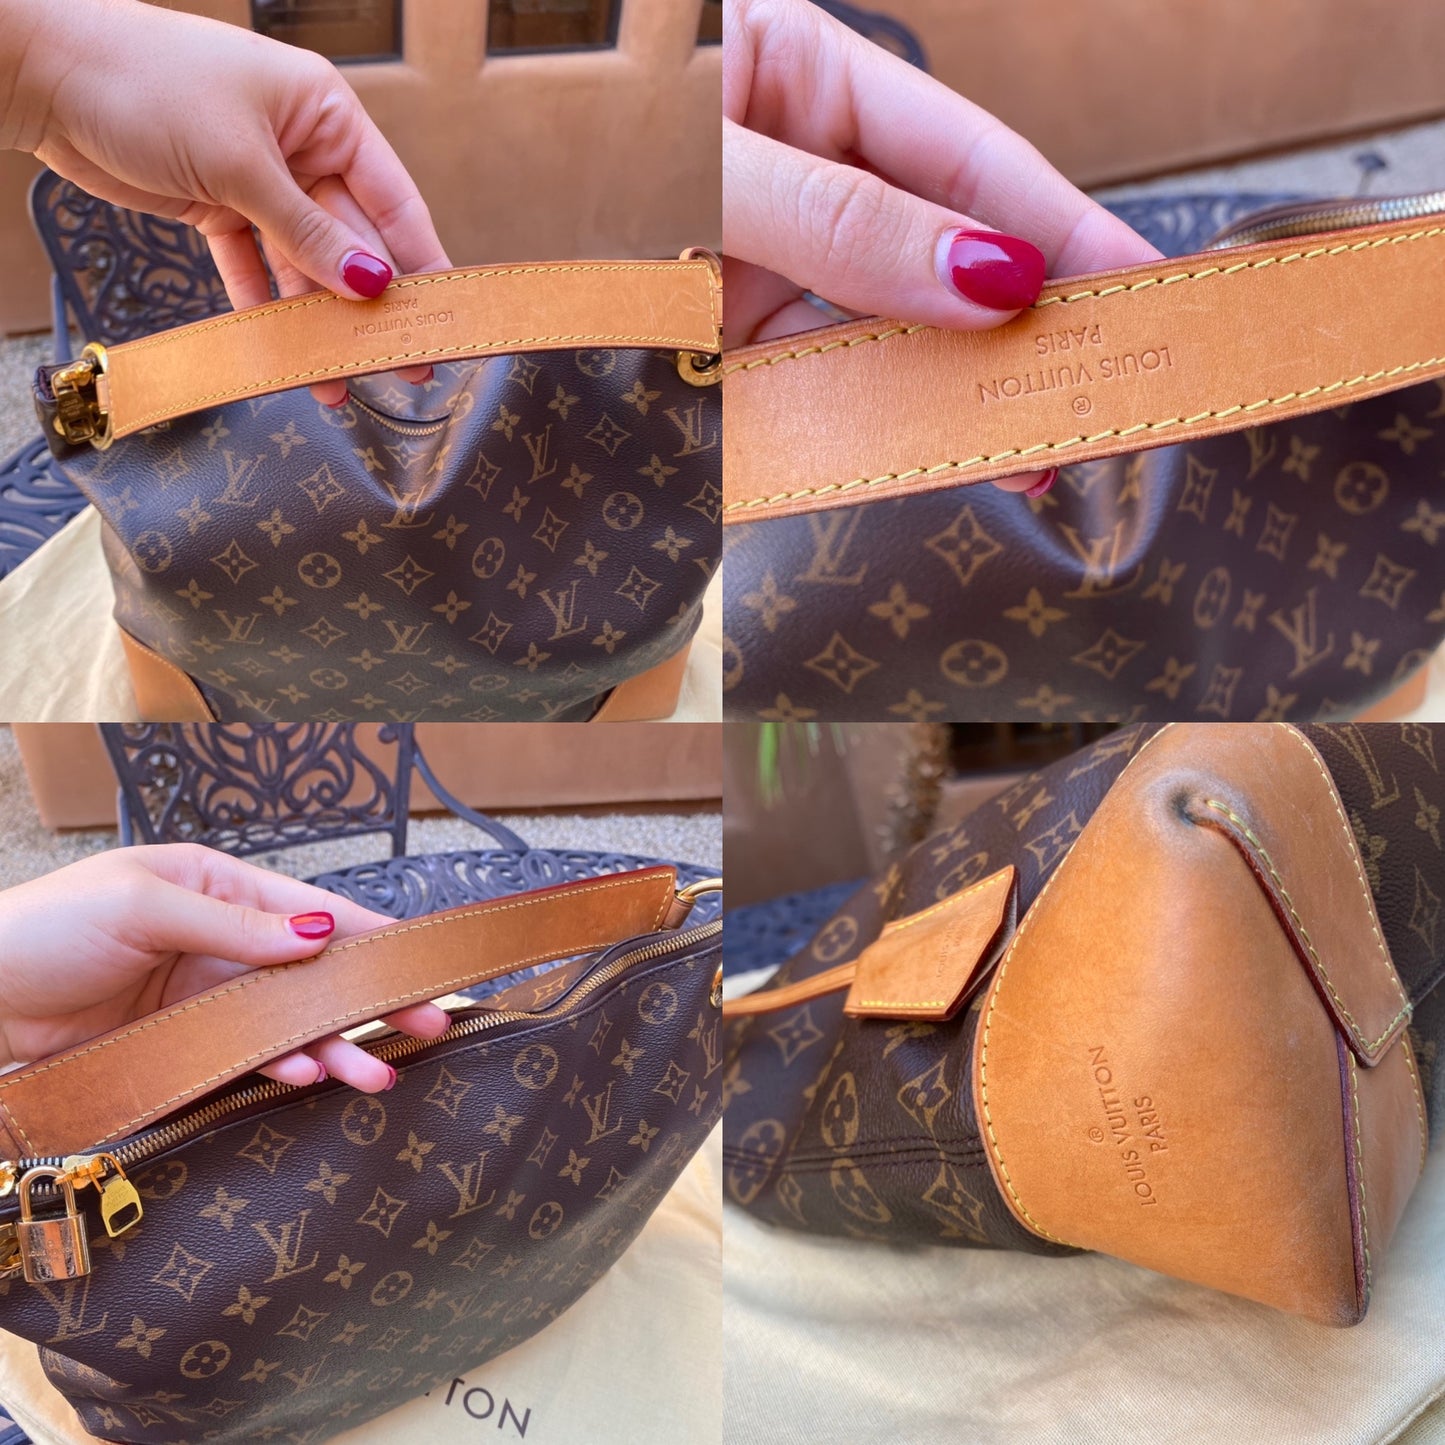 Louis Vuitton Monogram Berri PM Shoulder Bag